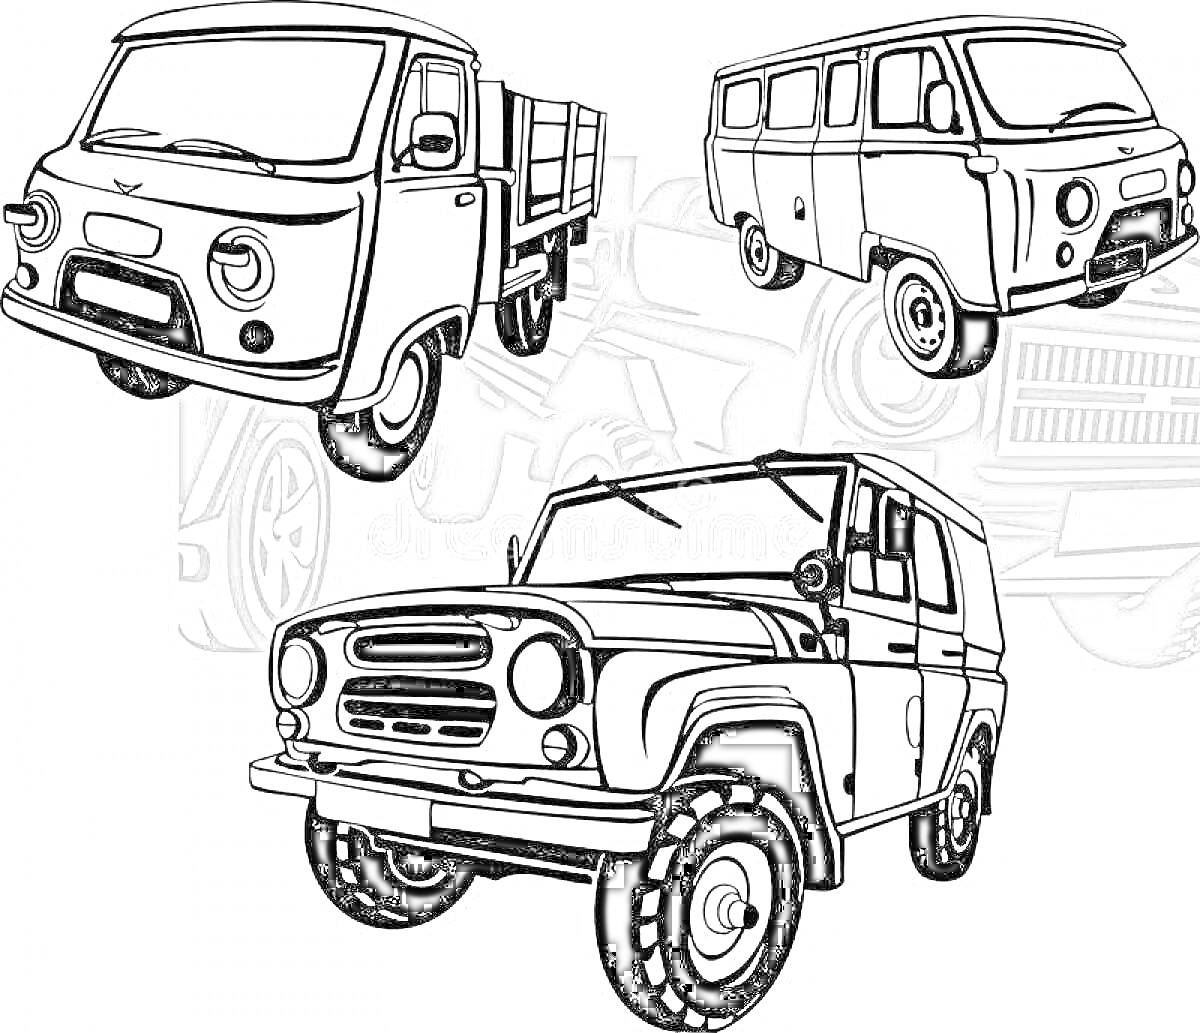 Раскраска УАЗ Hunter и другие модели УАЗ (грузовик, фургон)